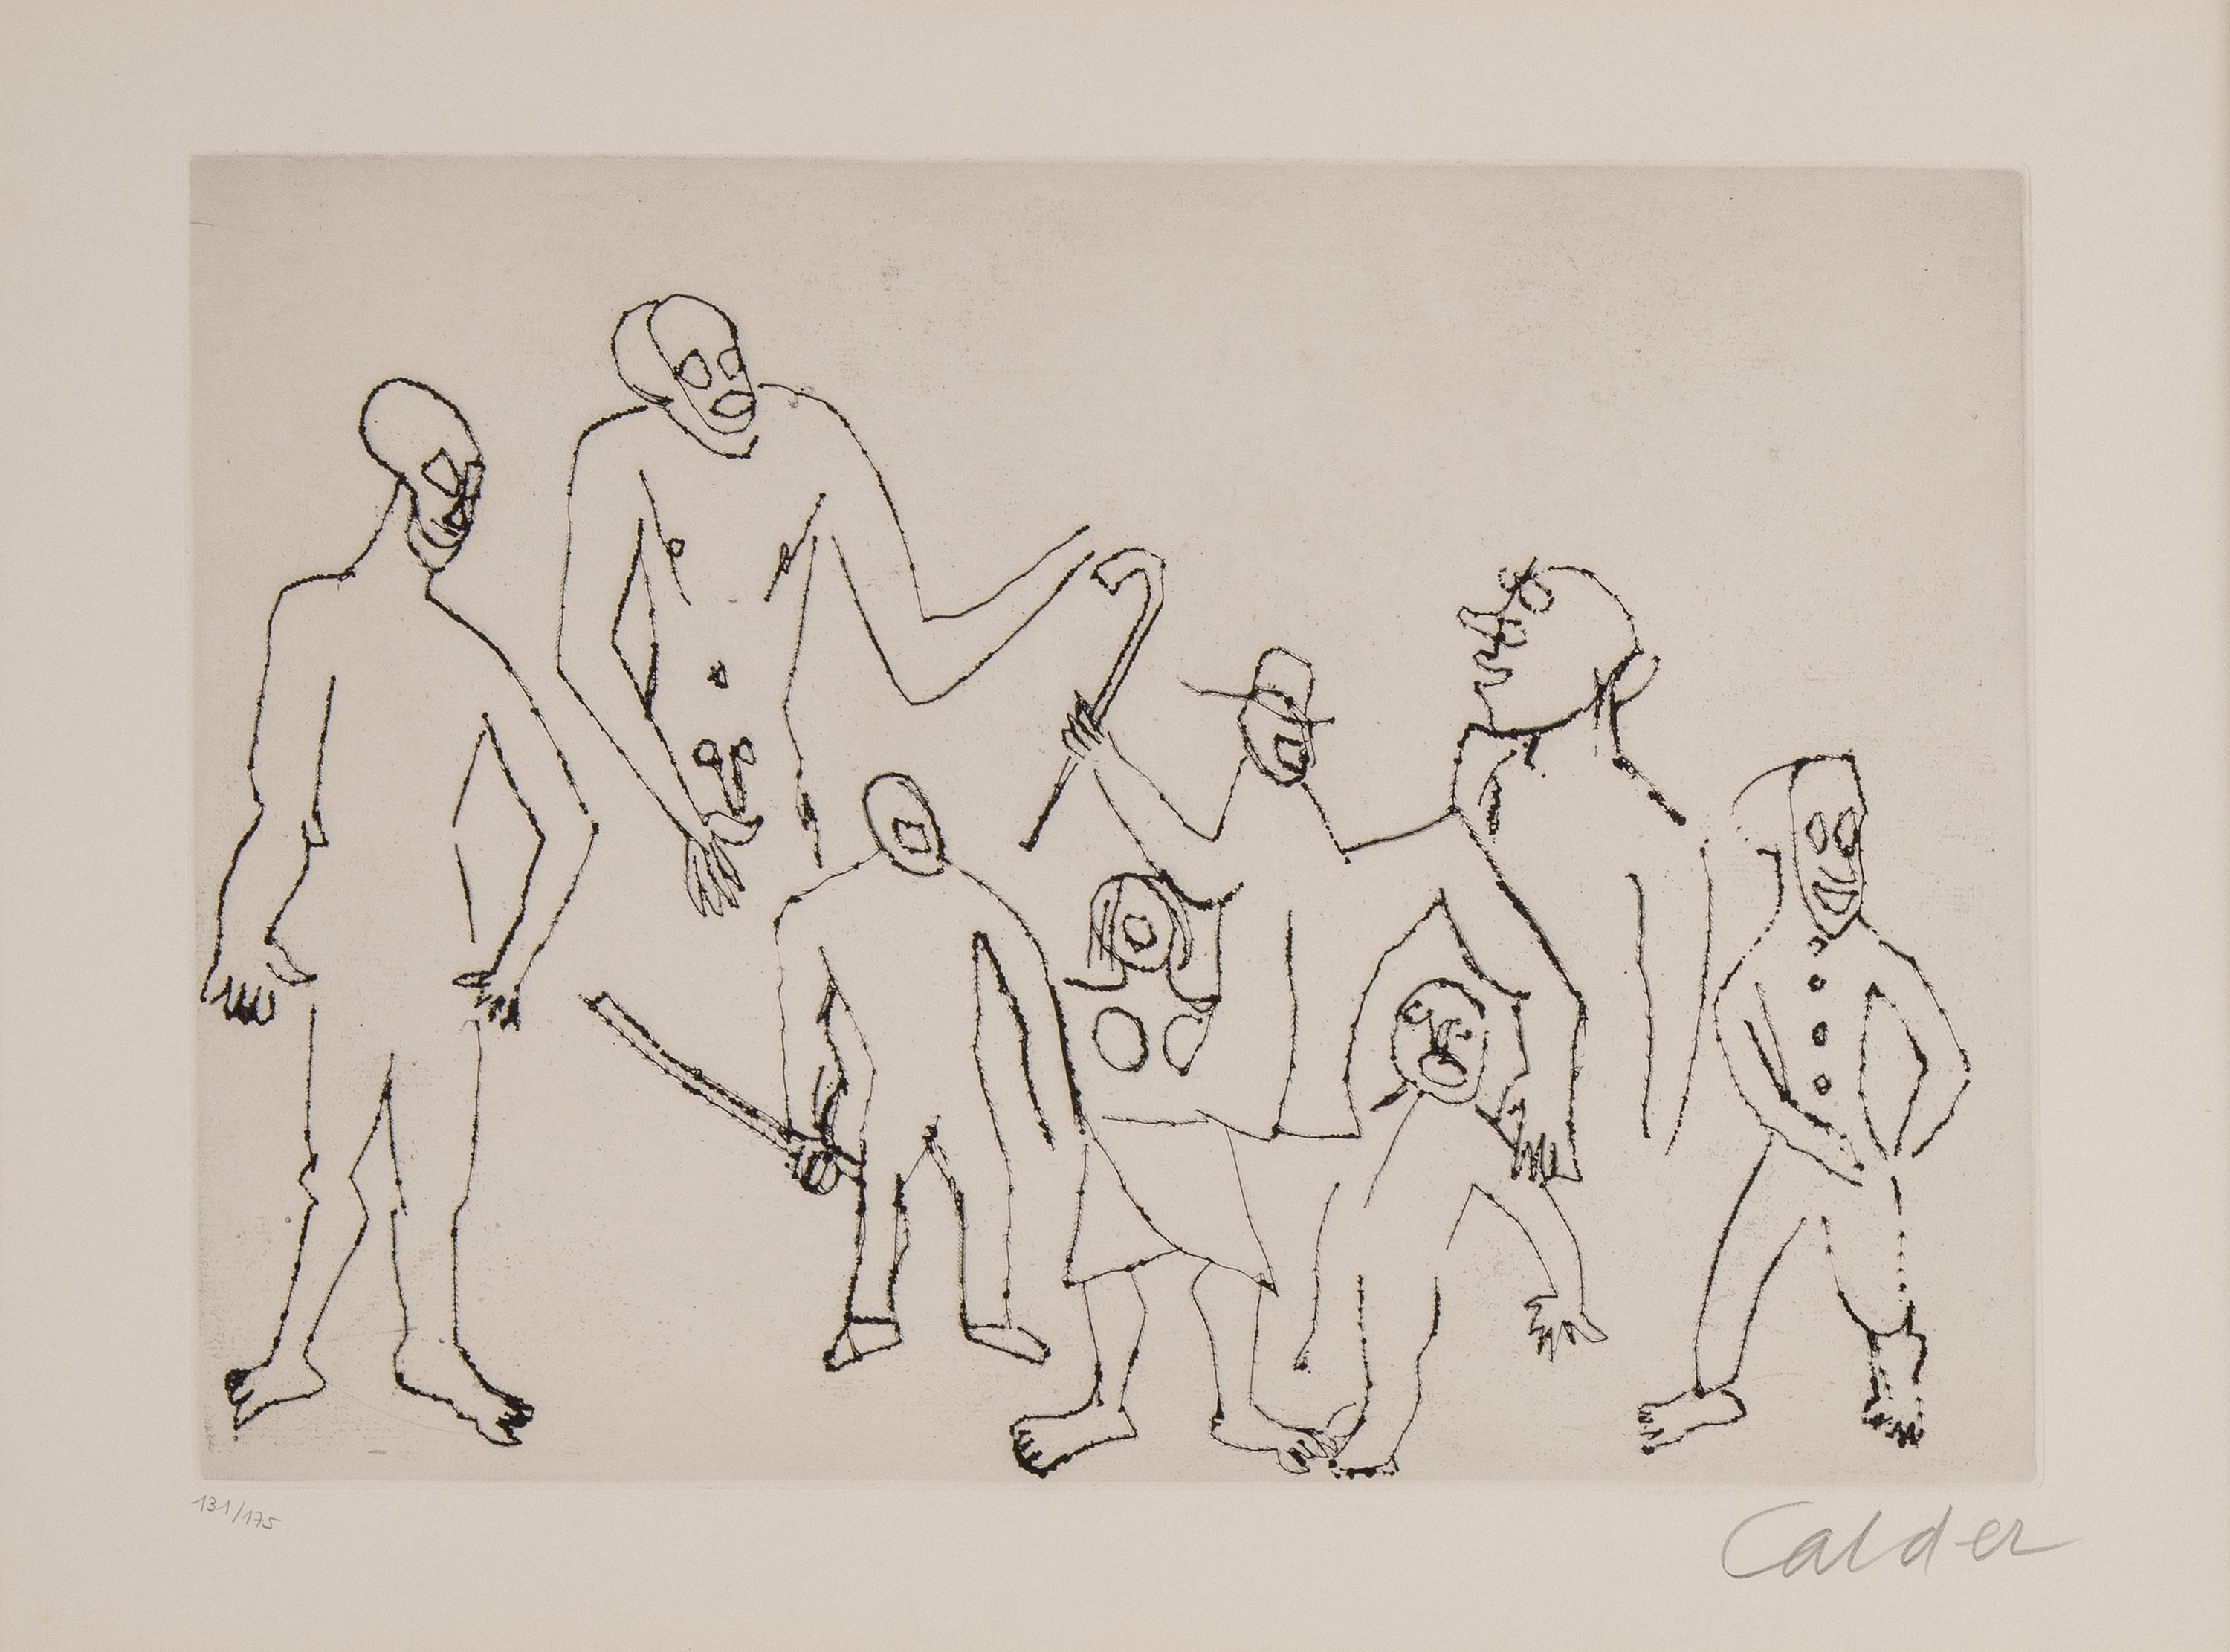 Alexander Calder signed and numbered etching (131 / 175).
